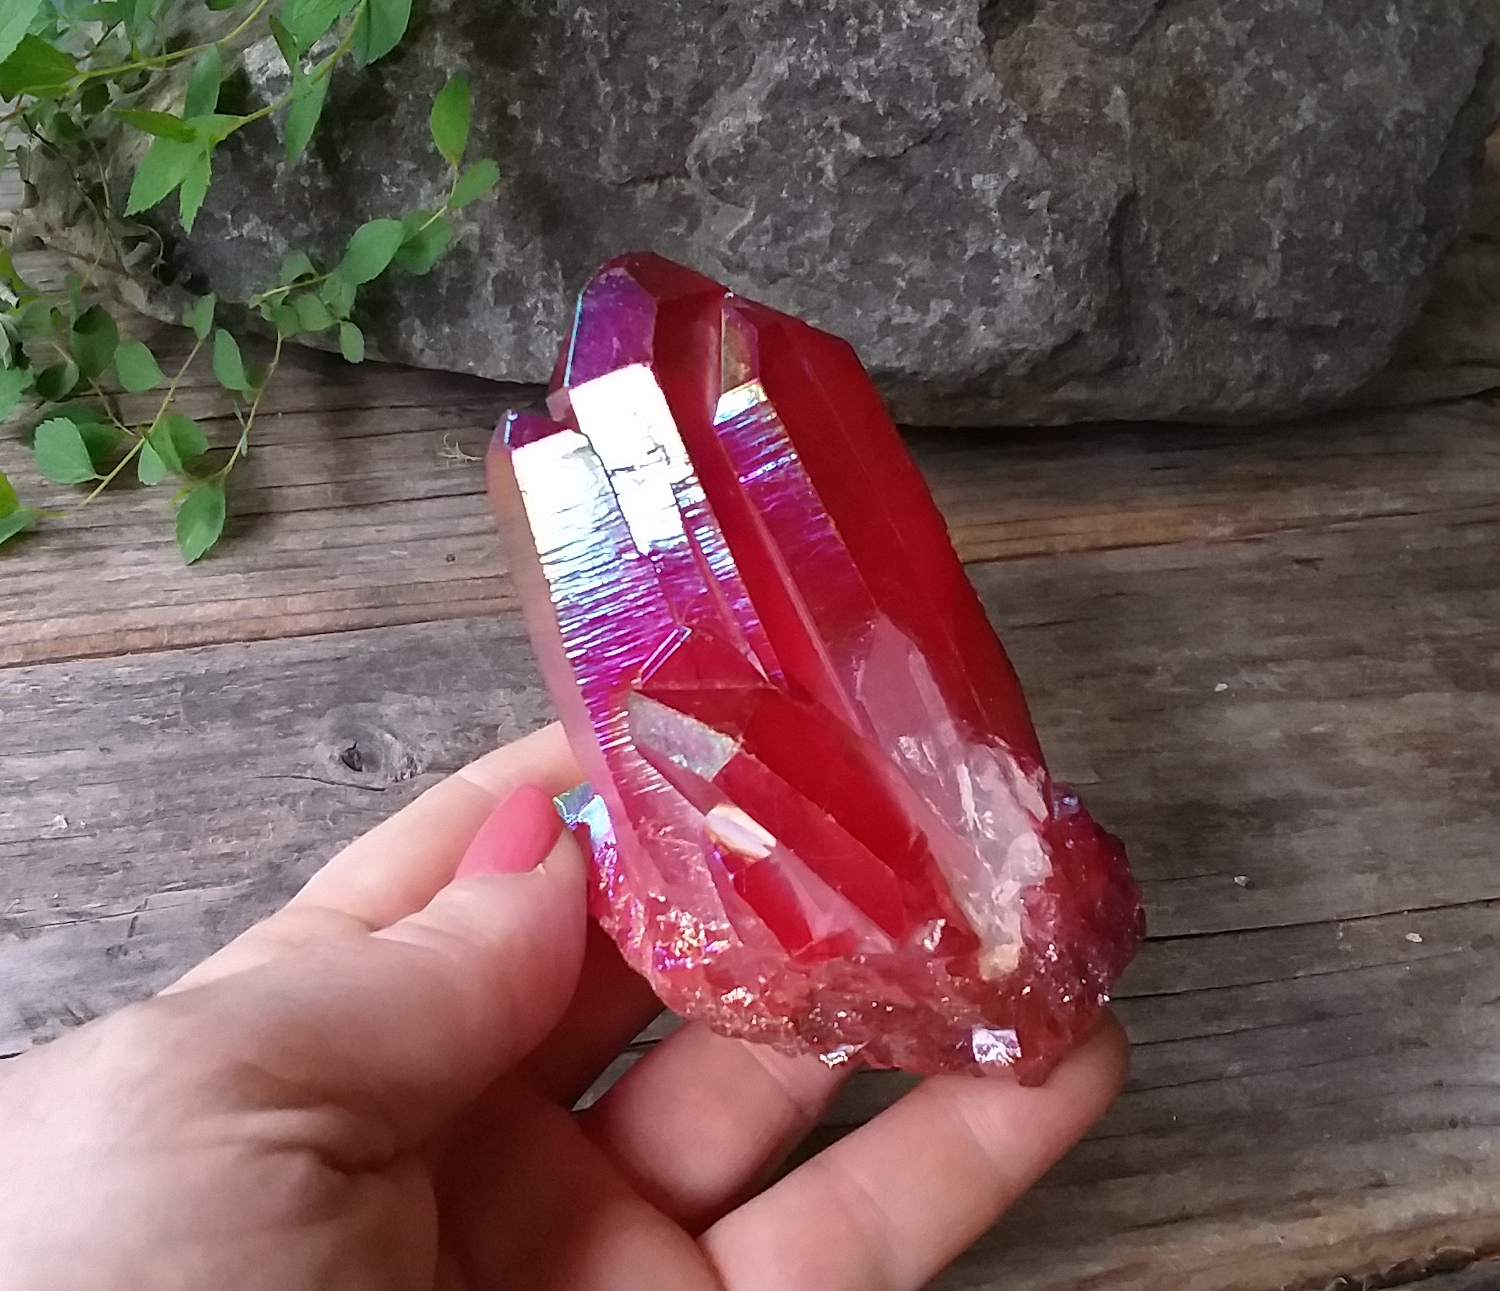 Hot pink rainbow aura crystal quartz cluster